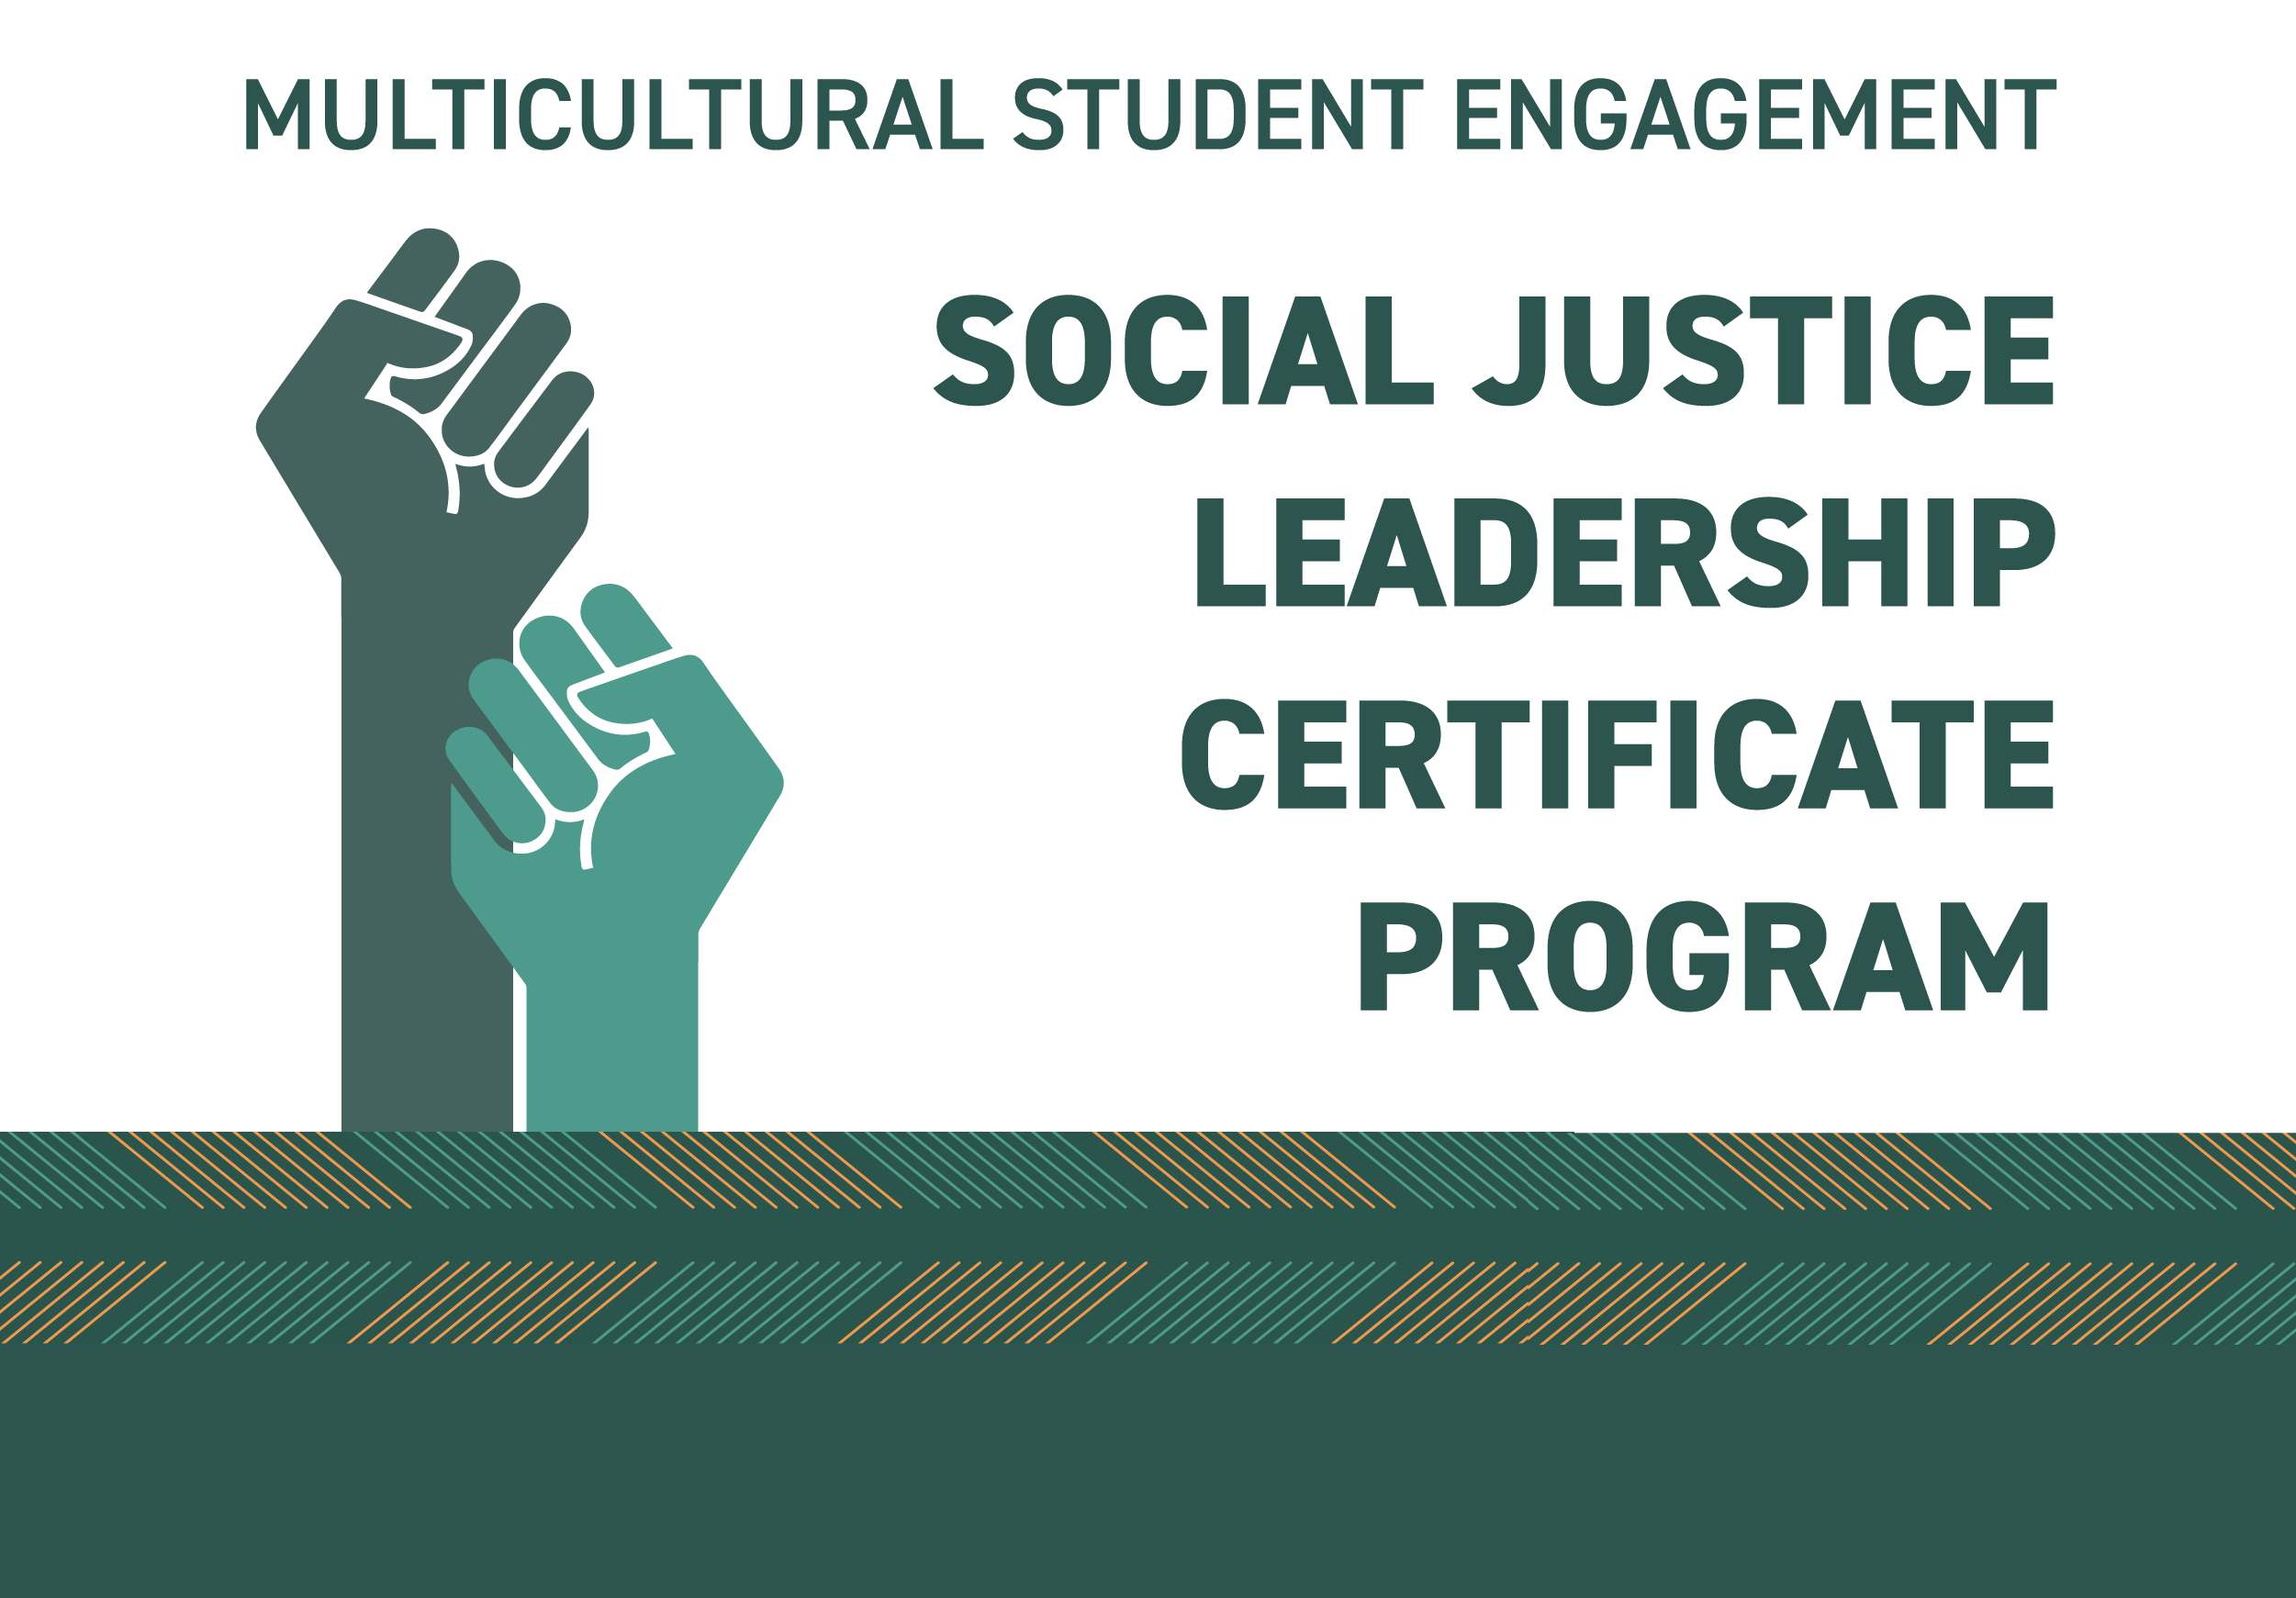 Multicultural Student Engagement Social Justice Leadership Certificate Program Image